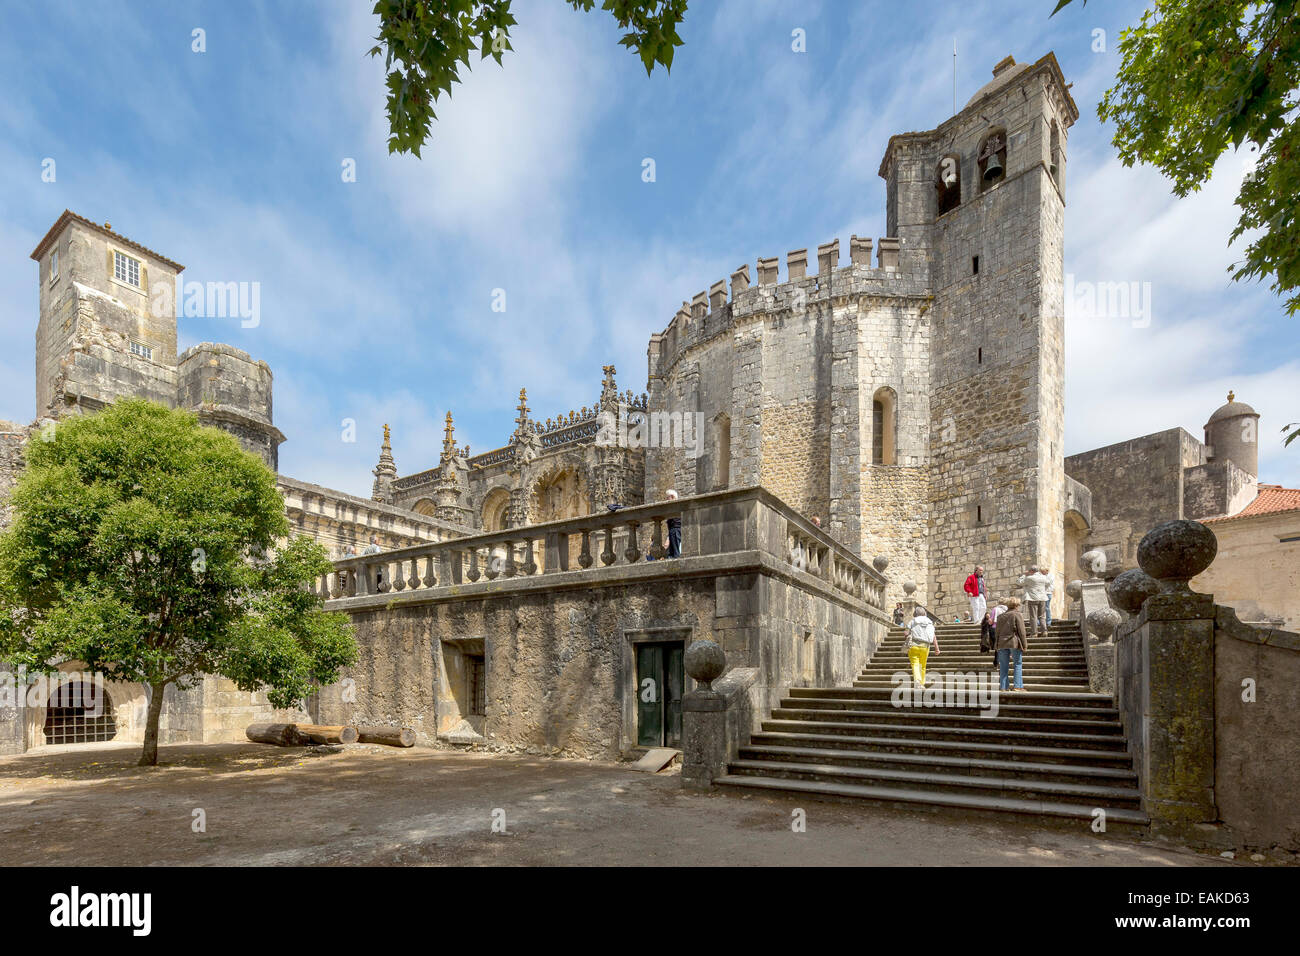 Convento de Cristo, Castle of the Knights Templar, UNESCO World Cultural Heritage Site, Tomar, Santarém District, Portugal Stock Photo